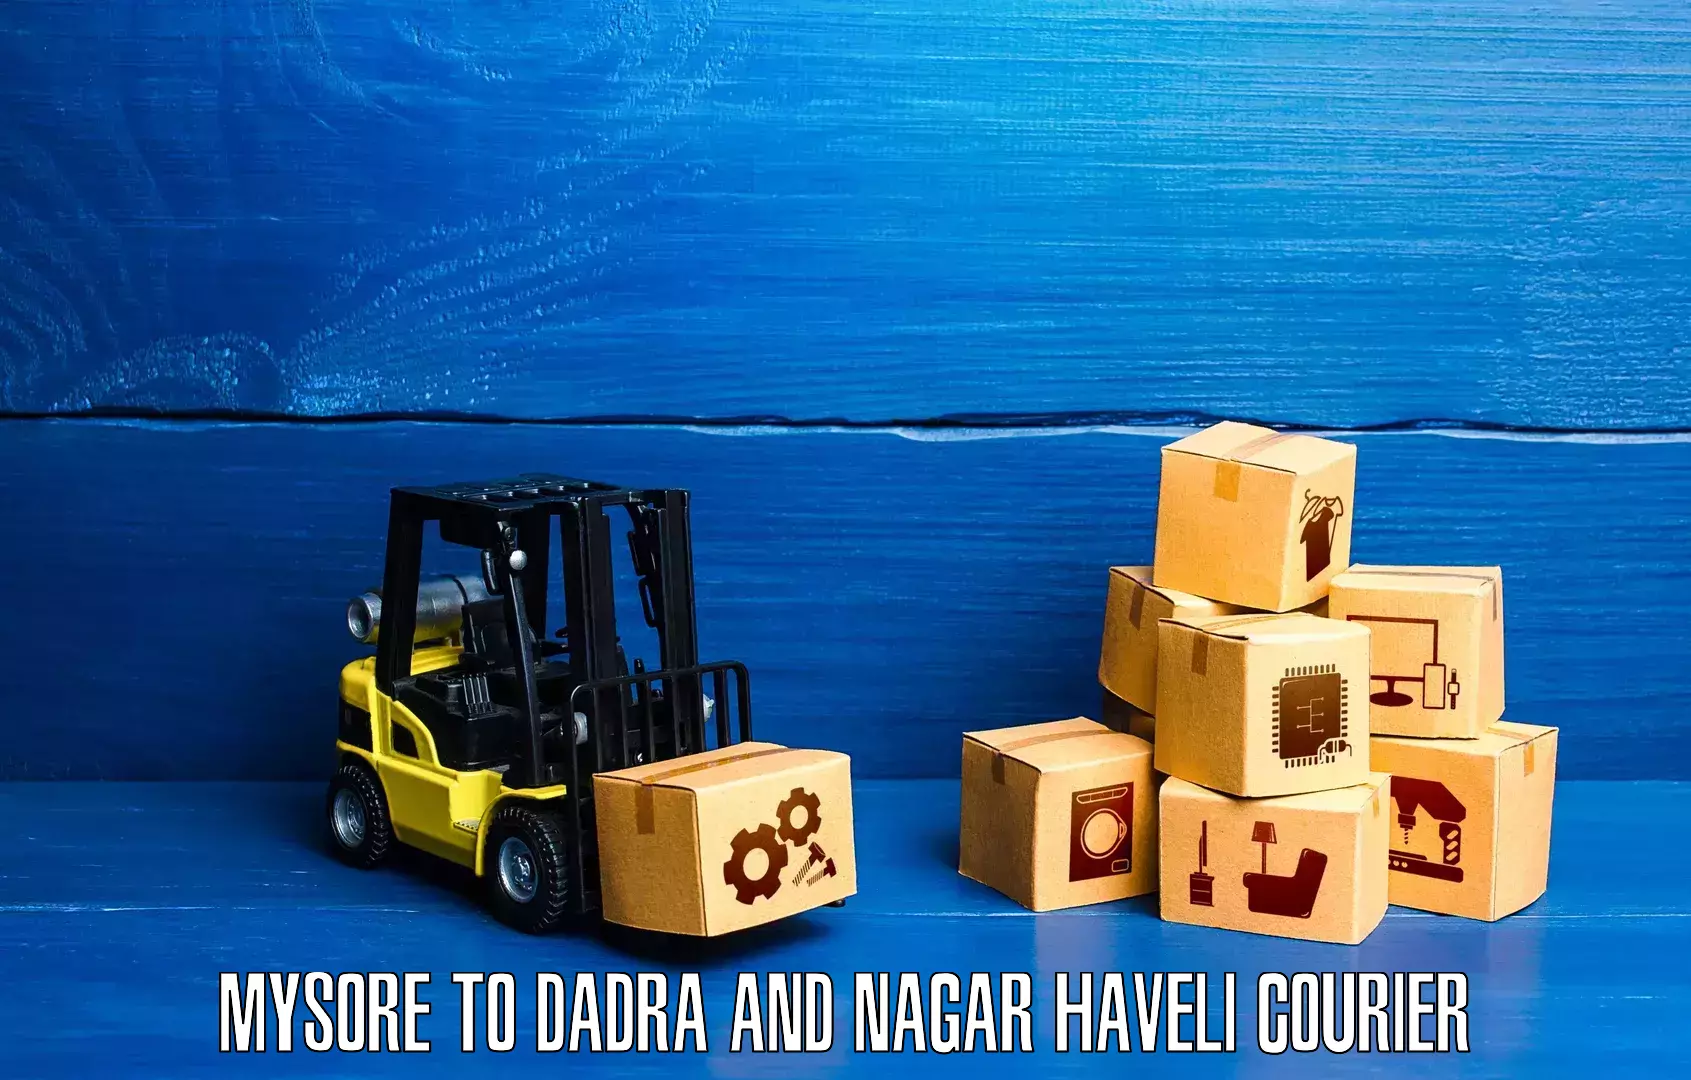 Courier service comparison Mysore to Dadra and Nagar Haveli